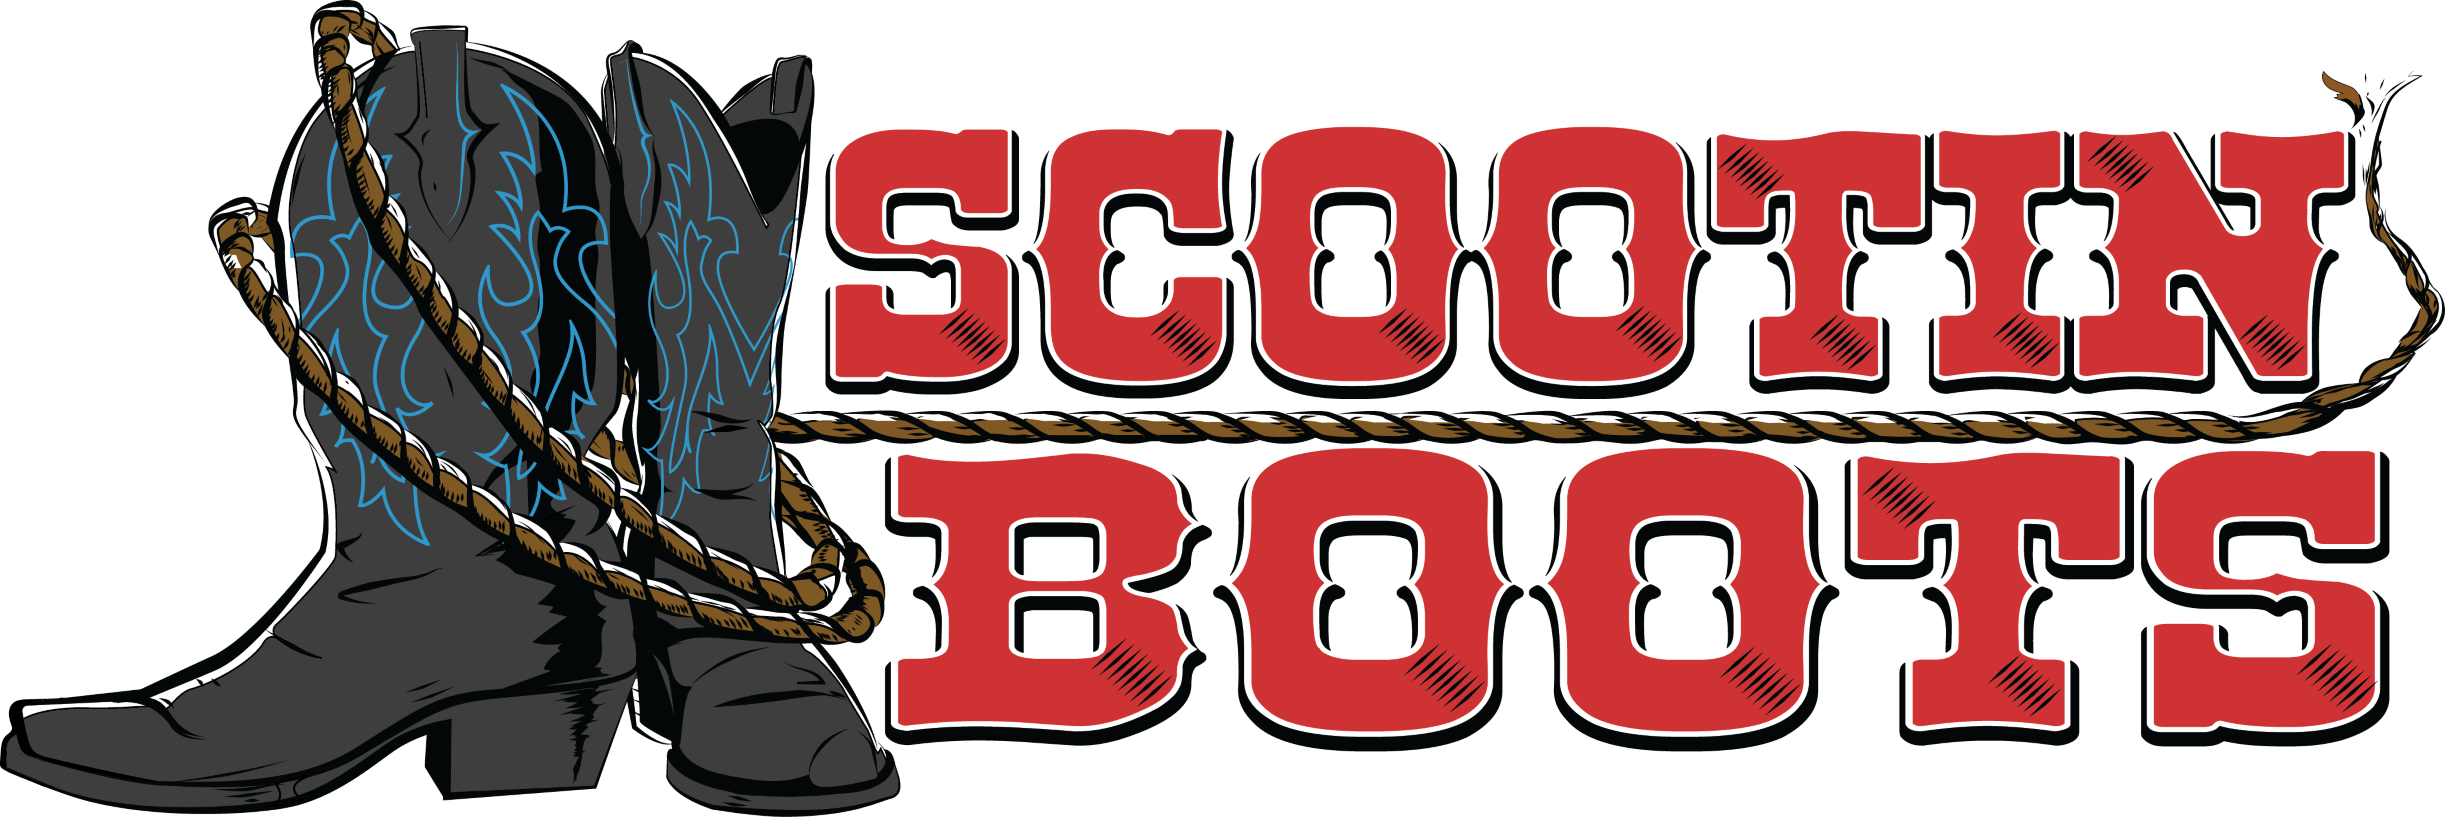 Scootin' Boots Dance Hall